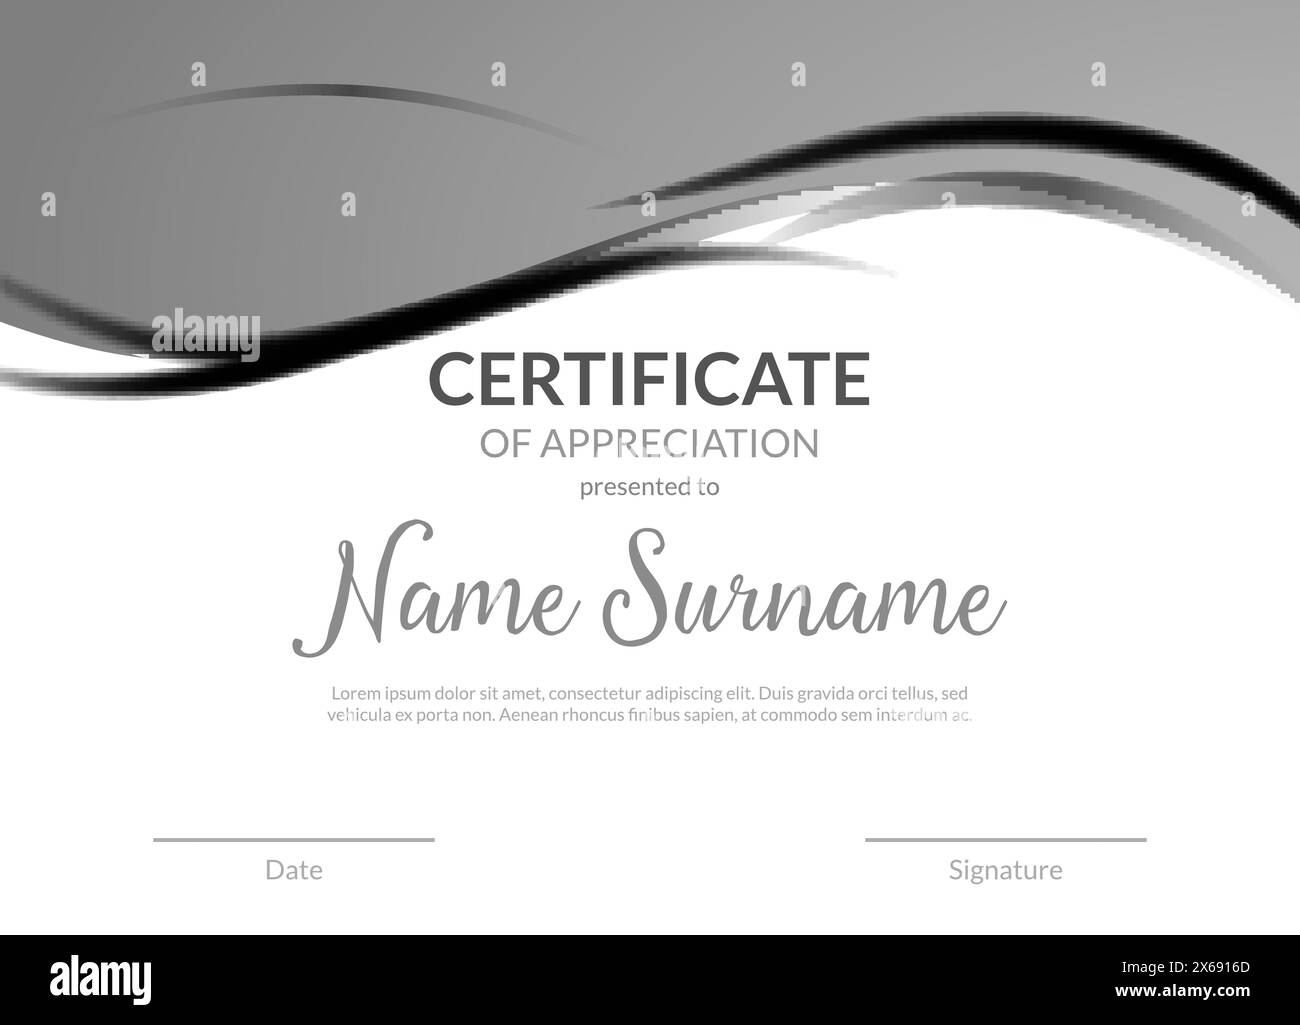 Certificate award diploma template design. Certificate appreciation modern business card award design Stock Vector